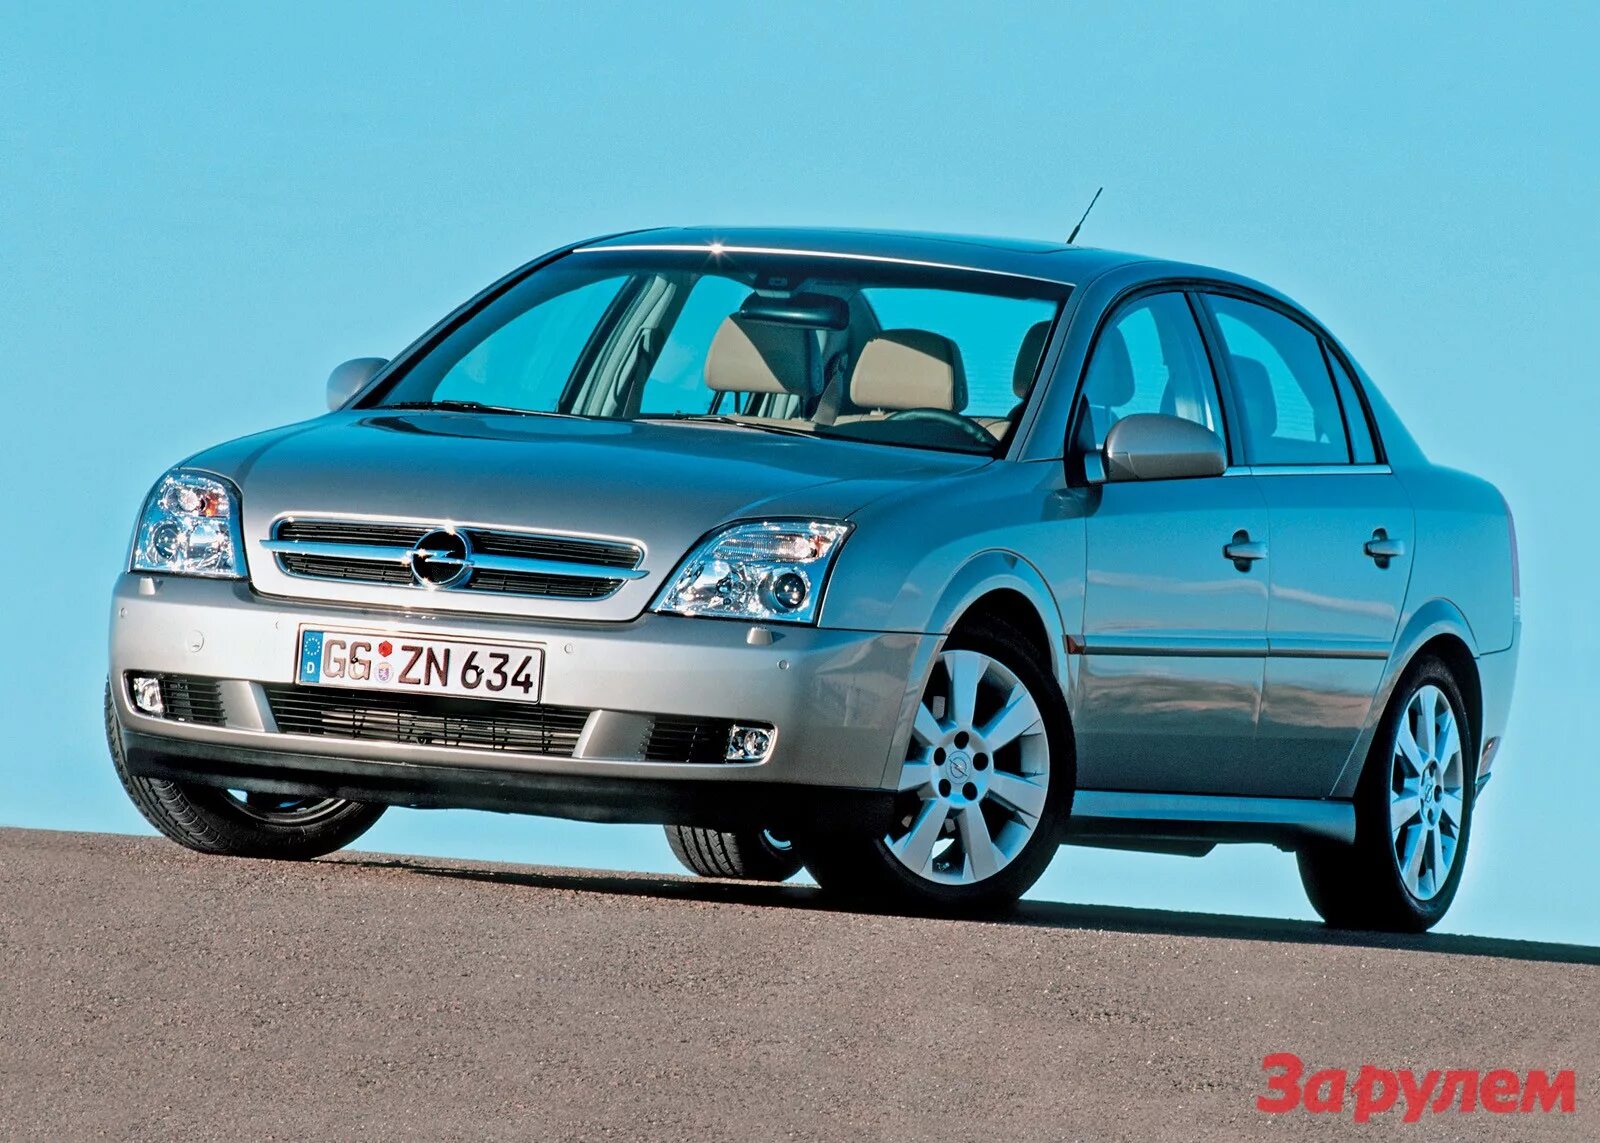 Opel Vectra c 2004. Opel Vectra 2.4. Опель Вектра ц 2002. Опель Вектра с 2.2. Покажи опель вектра б